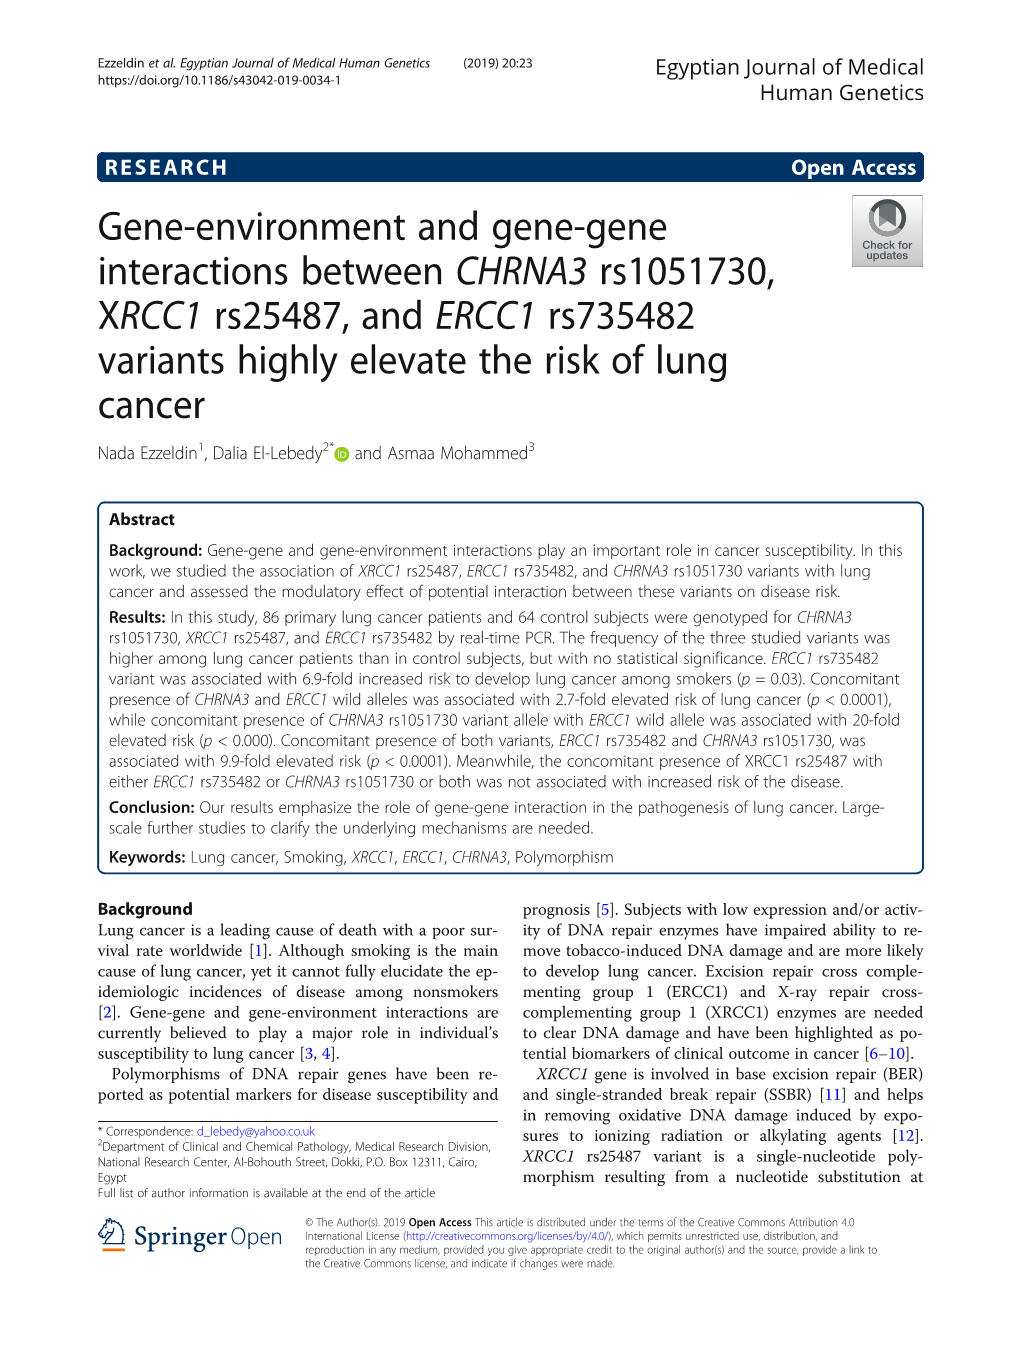 Gene-Environment and Gene-Gene Interactions Between CHRNA3